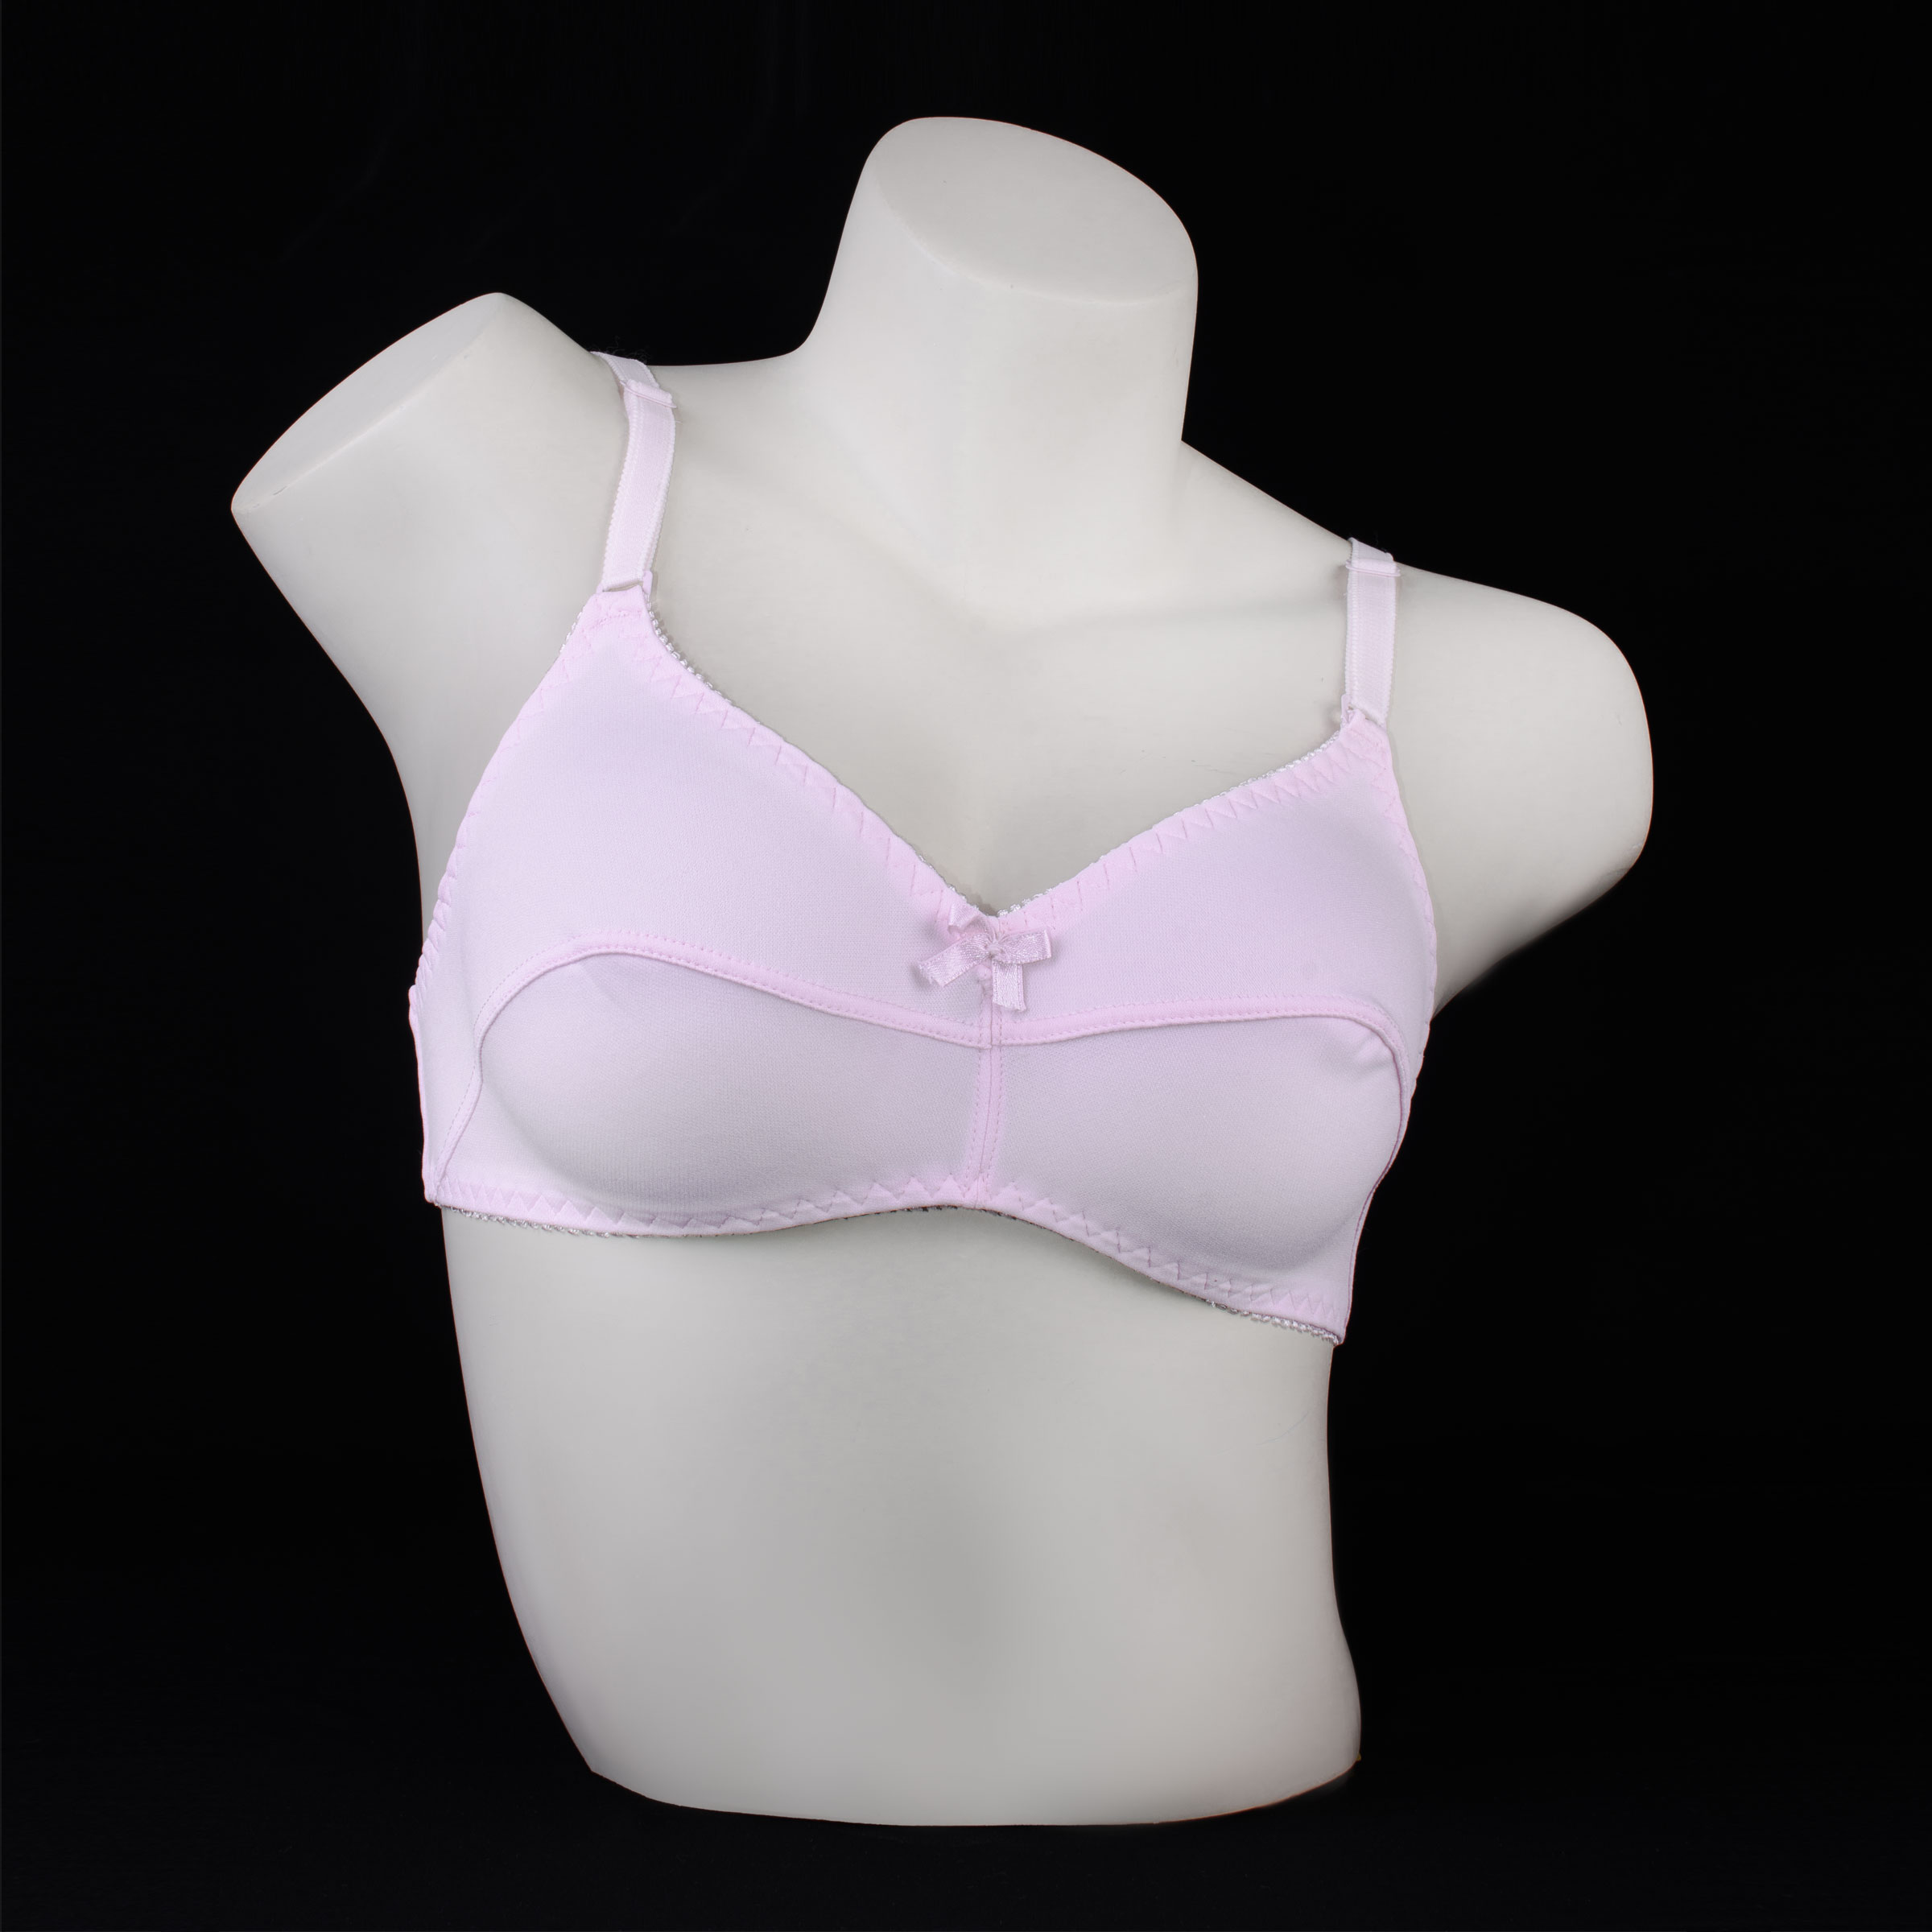 IFG brand - Nursing bra available